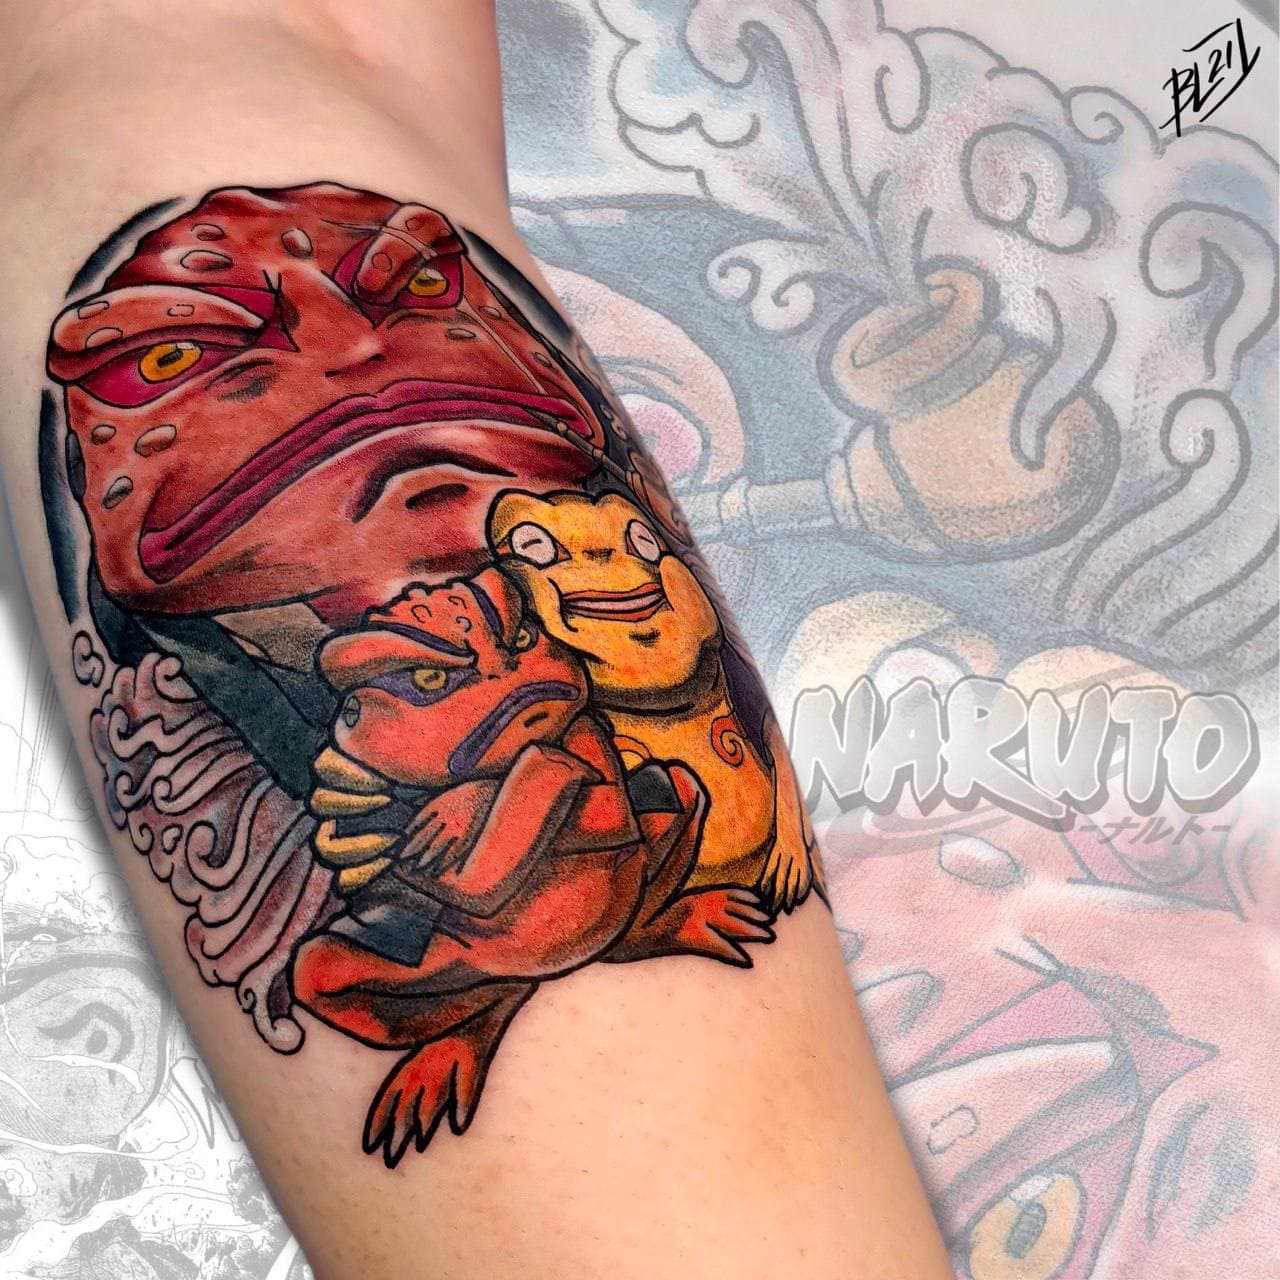 Gamabunta by alxnarutoall on DeviantArt | Naruto tattoo, Naruto art, Naruto  characters